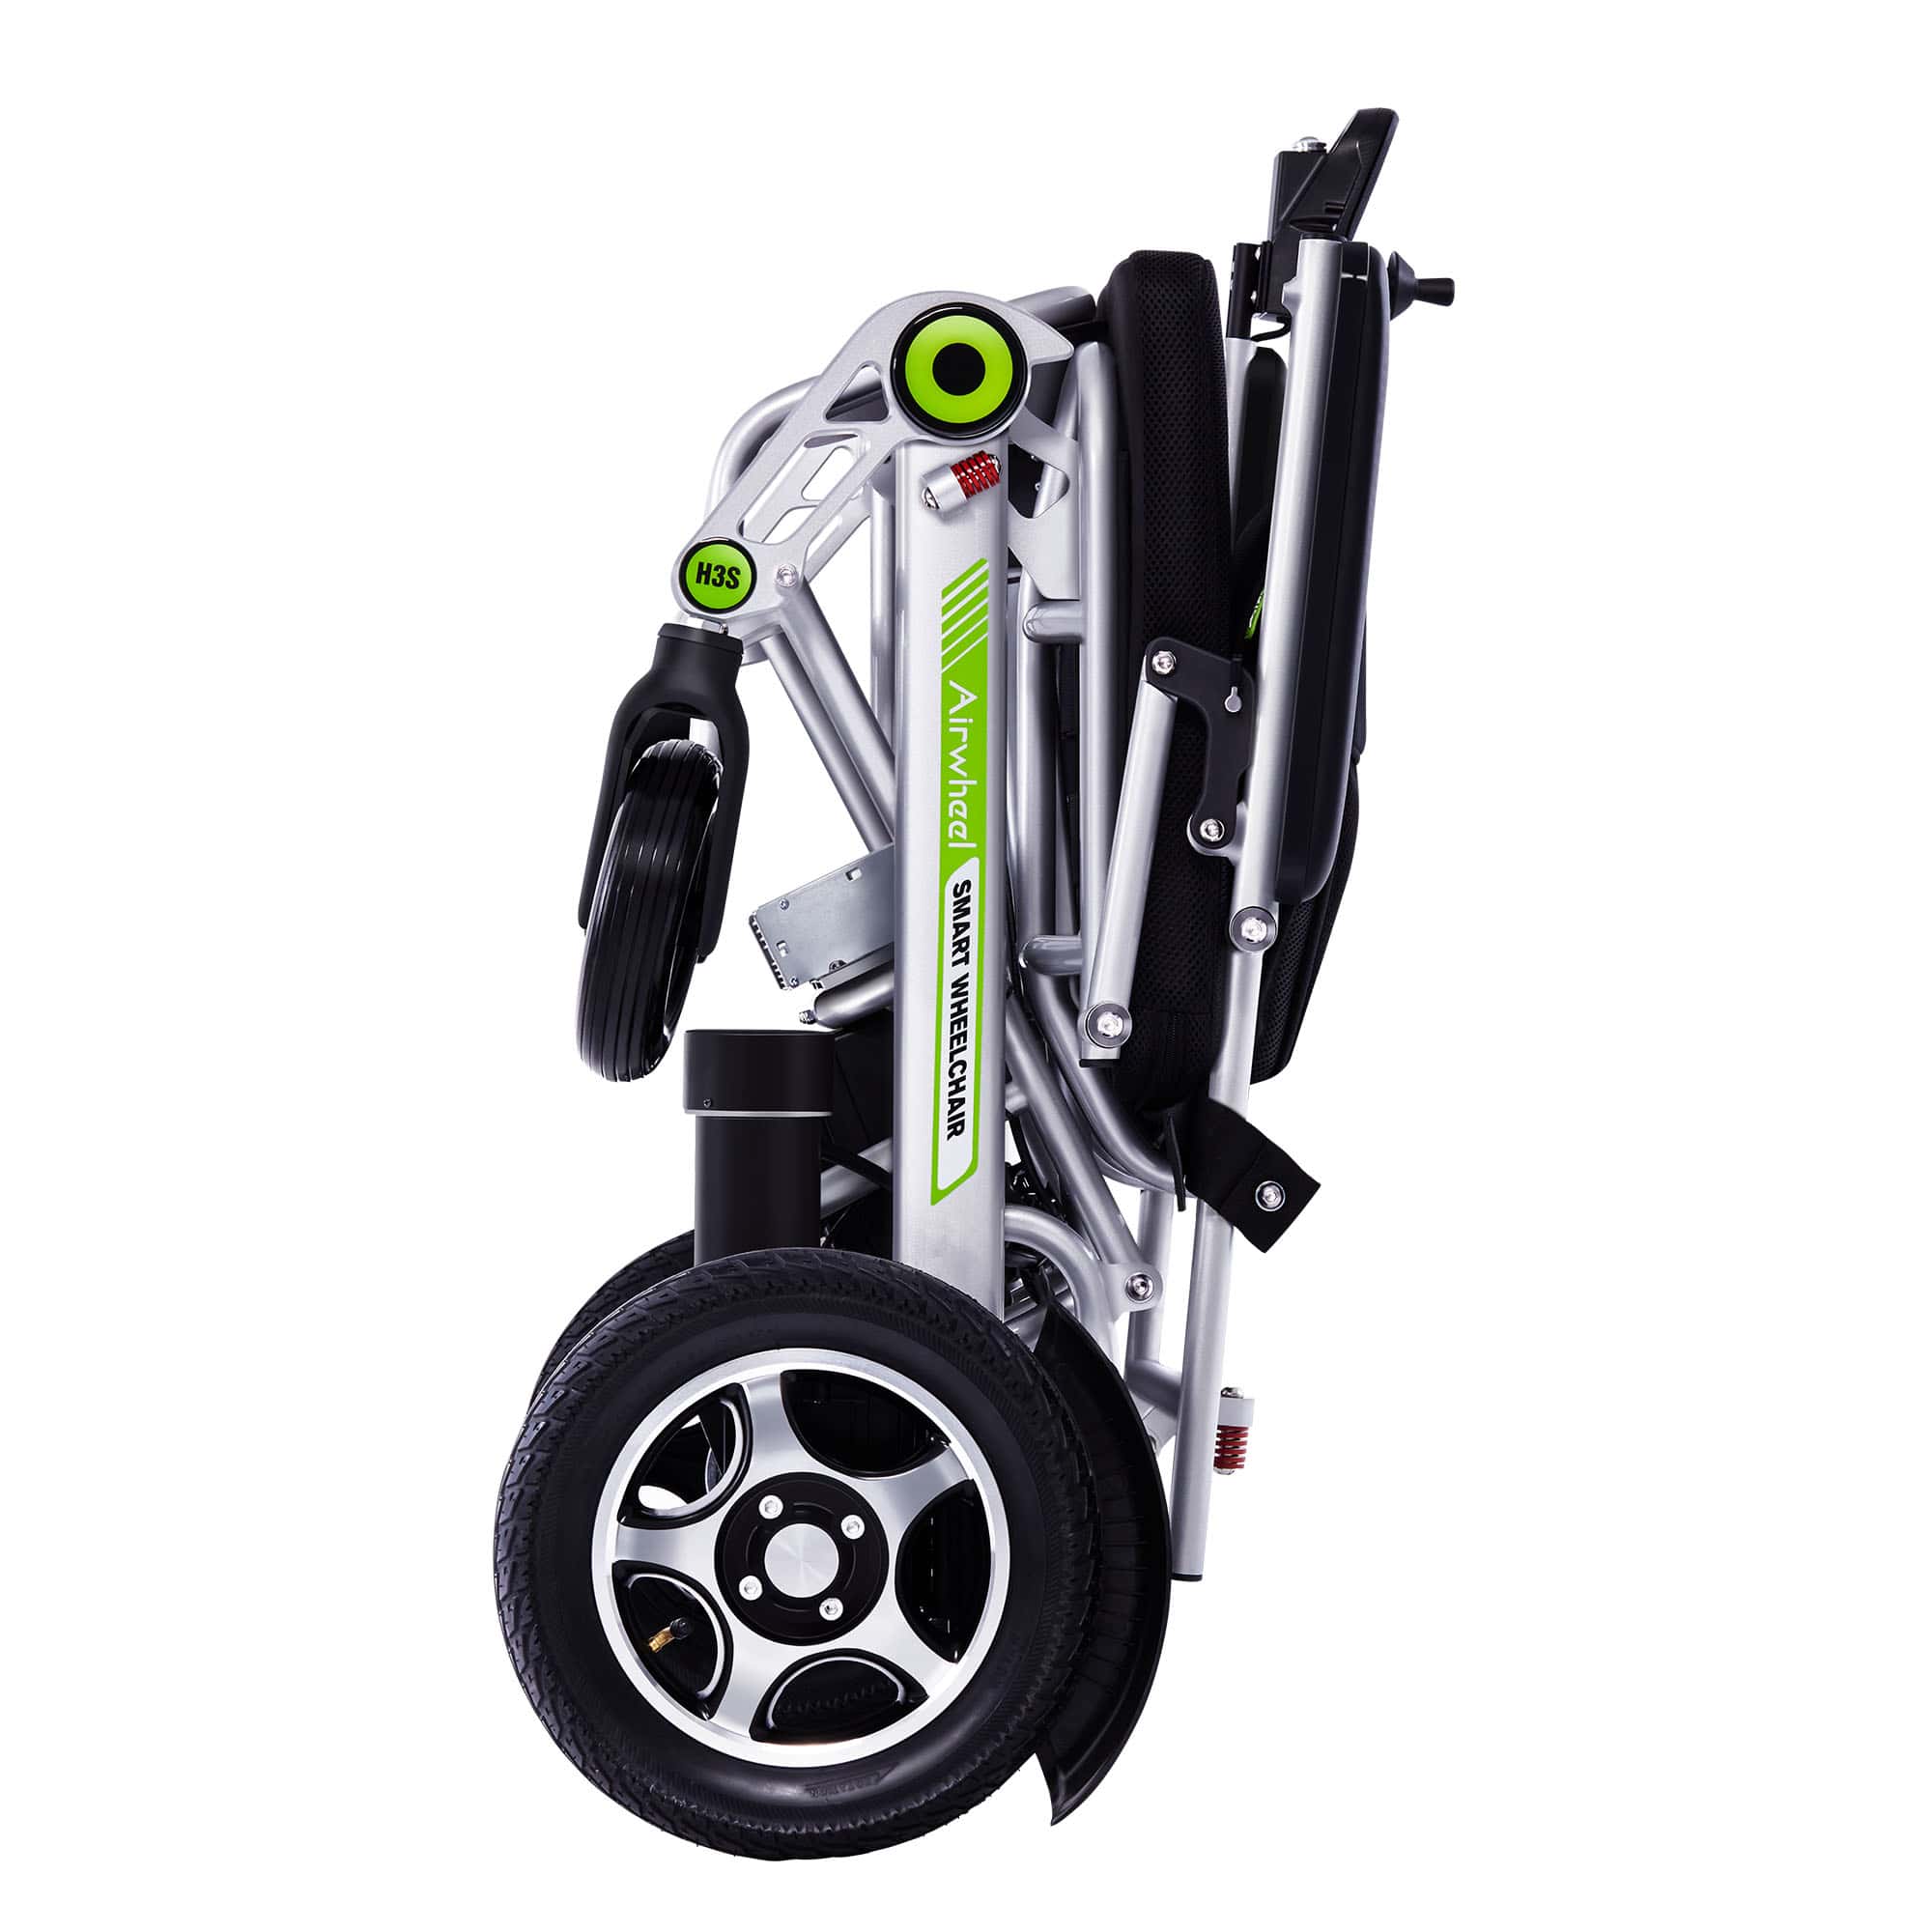 Airwheel H3S - A smart power wheelchair